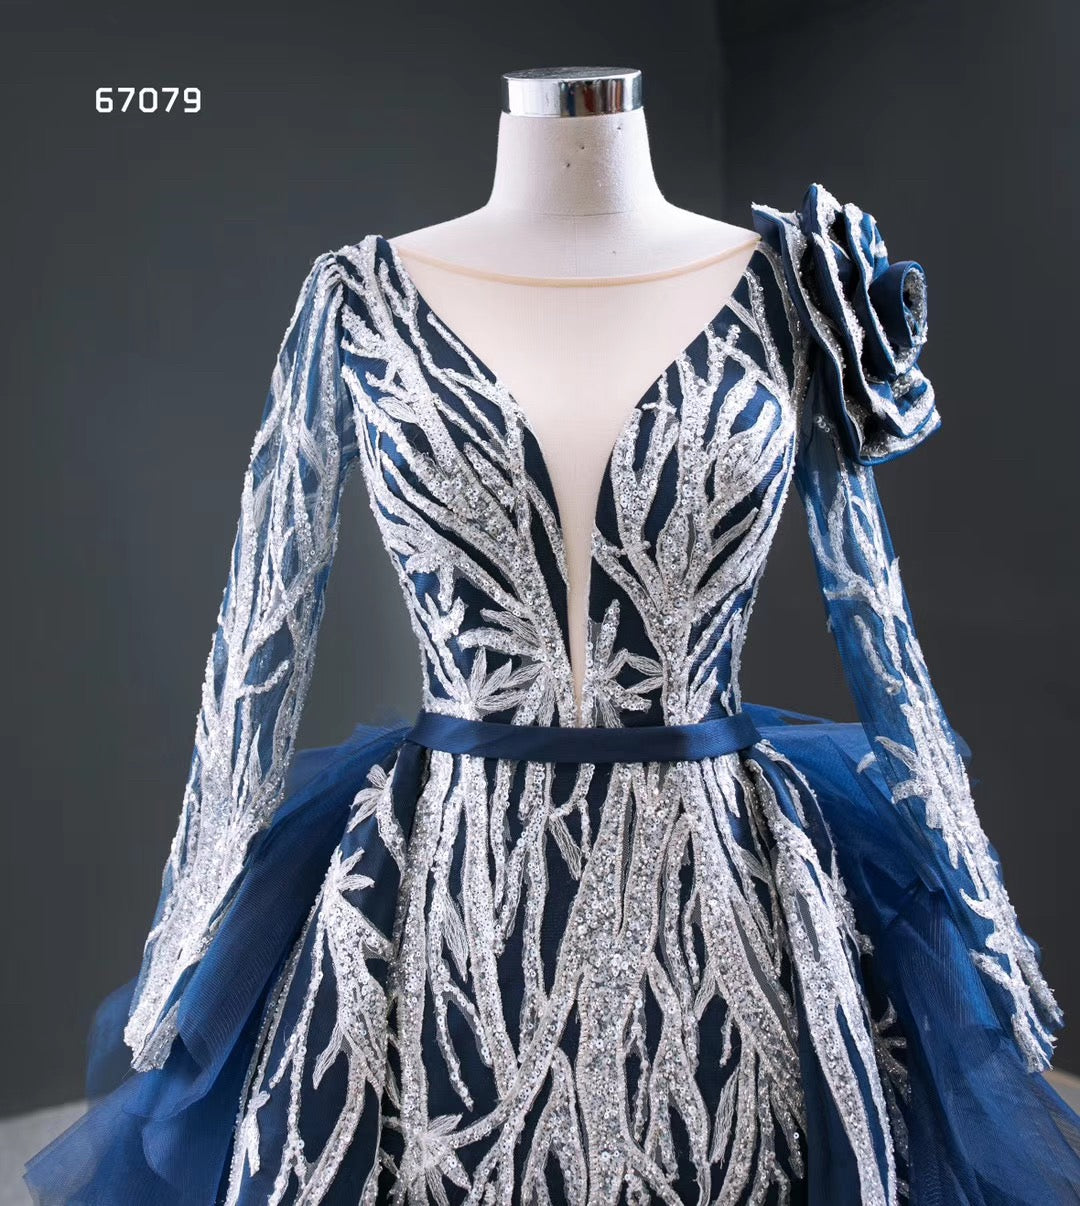 Royal Navy Blue Long Sleeves Detachable Train Luxury Sequin Evening Ball Gown - FashionByTeresa